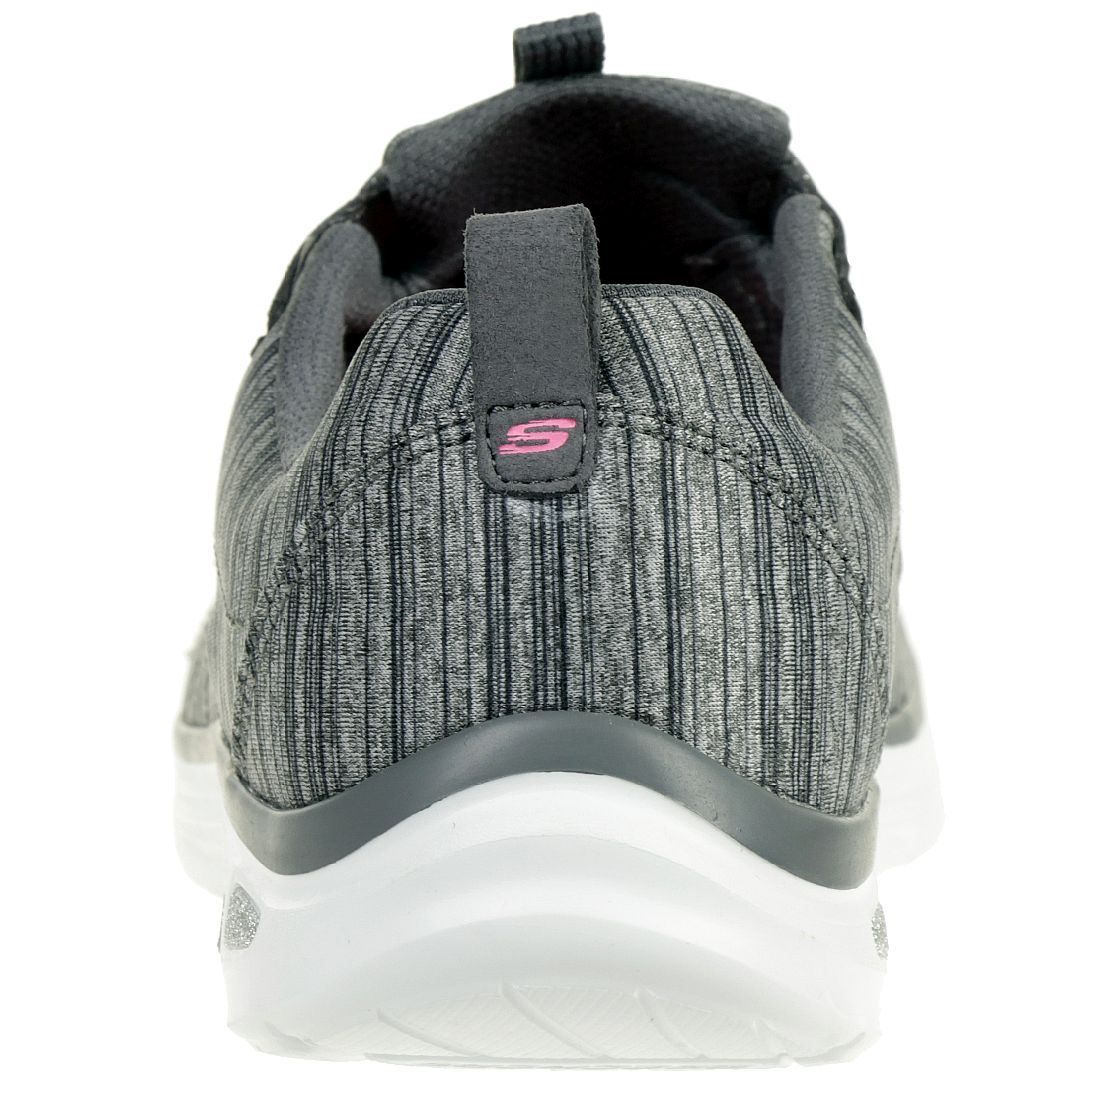 Skechers Relaxed Fit EMPIRE D'LUX Damen Sneaker Air cooled Memory Foam grau 12820